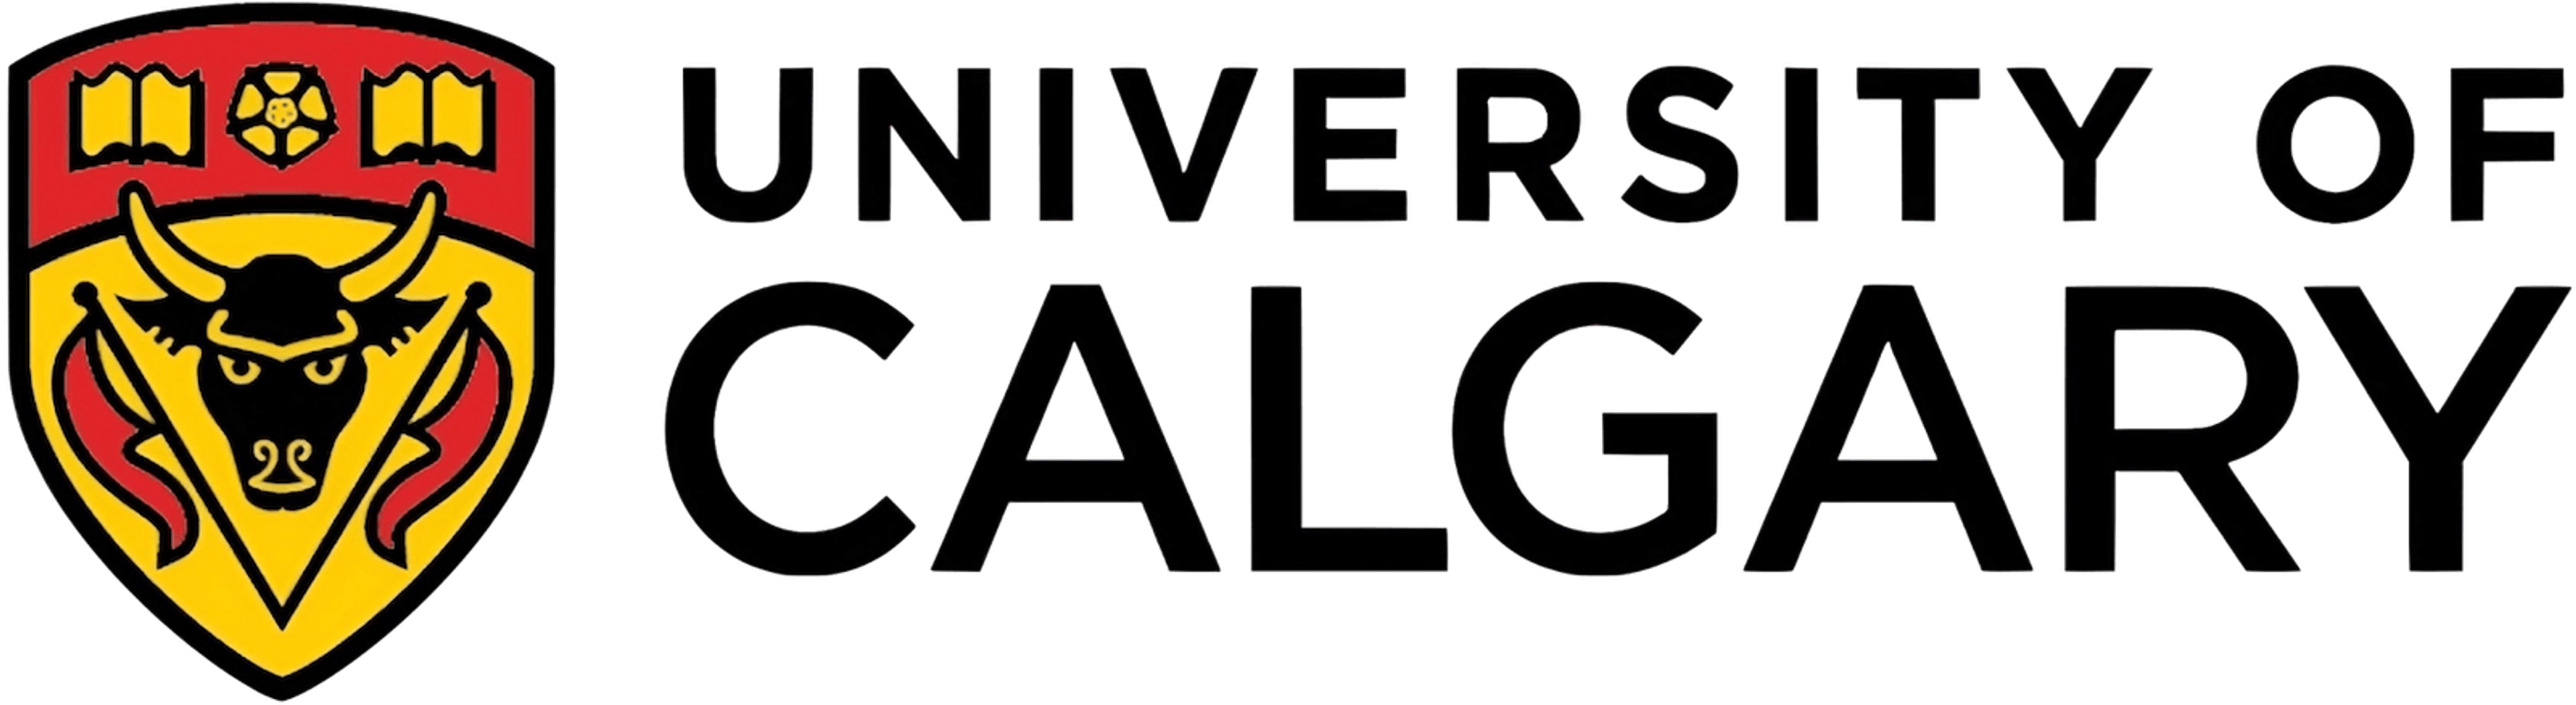 University of Calgary logo on a transparent background